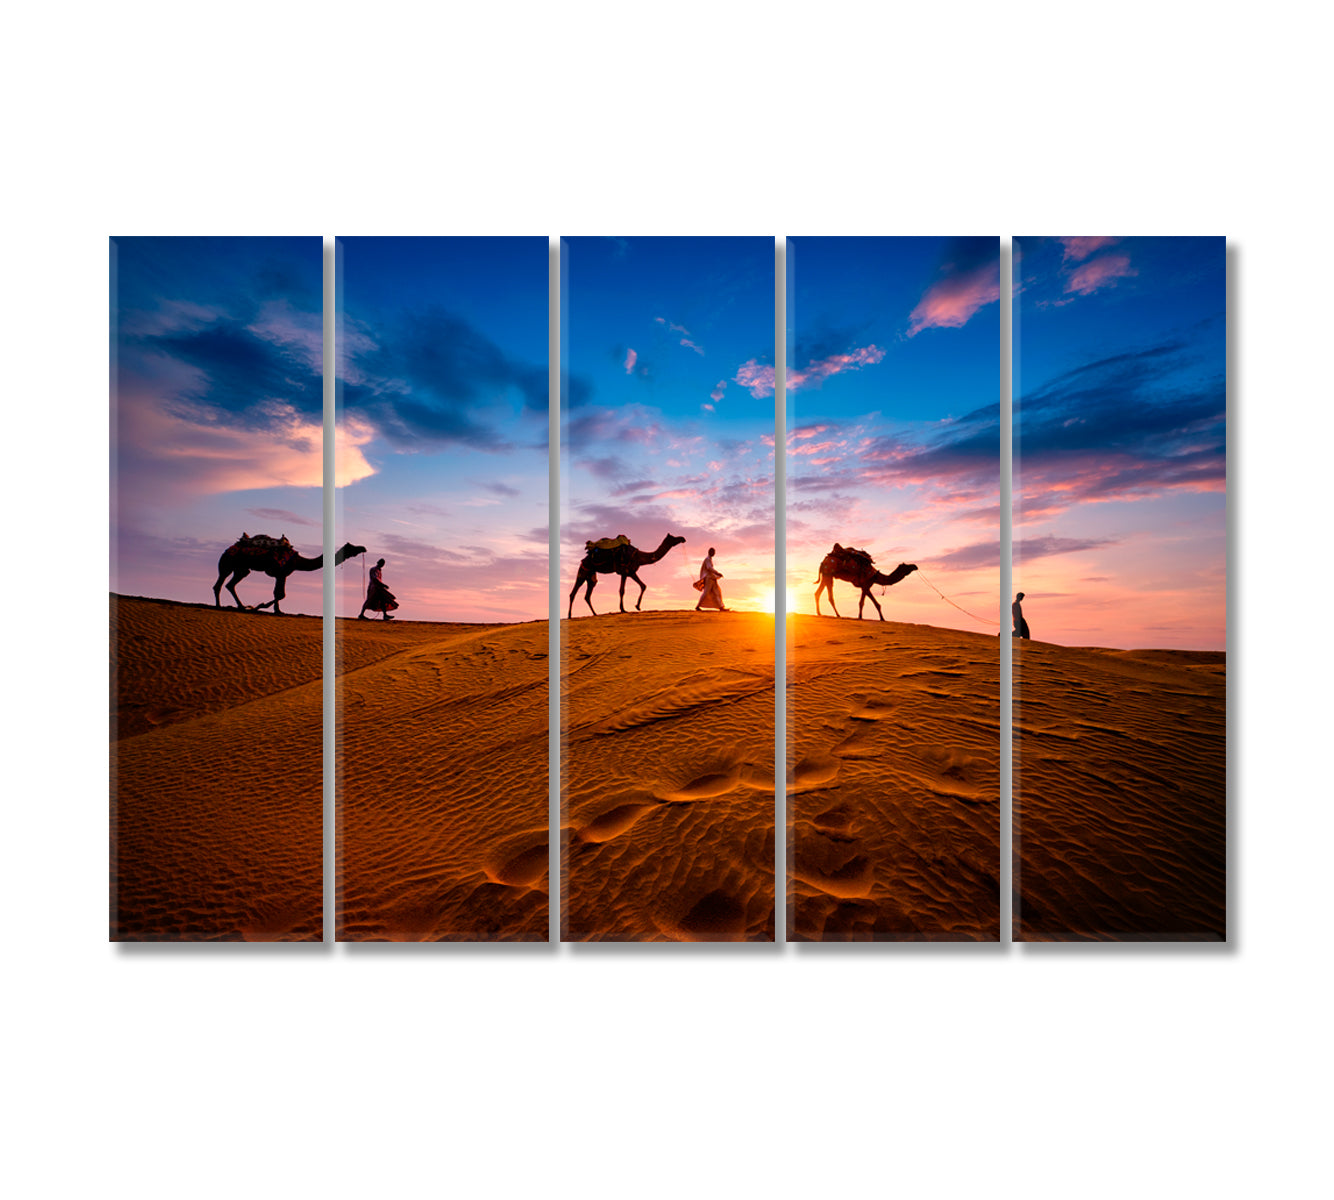 Camel Caravan Silhouette in Desert at Sunset Canvas Print-Canvas Print-CetArt-5 Panels-36x24 inches-CetArt